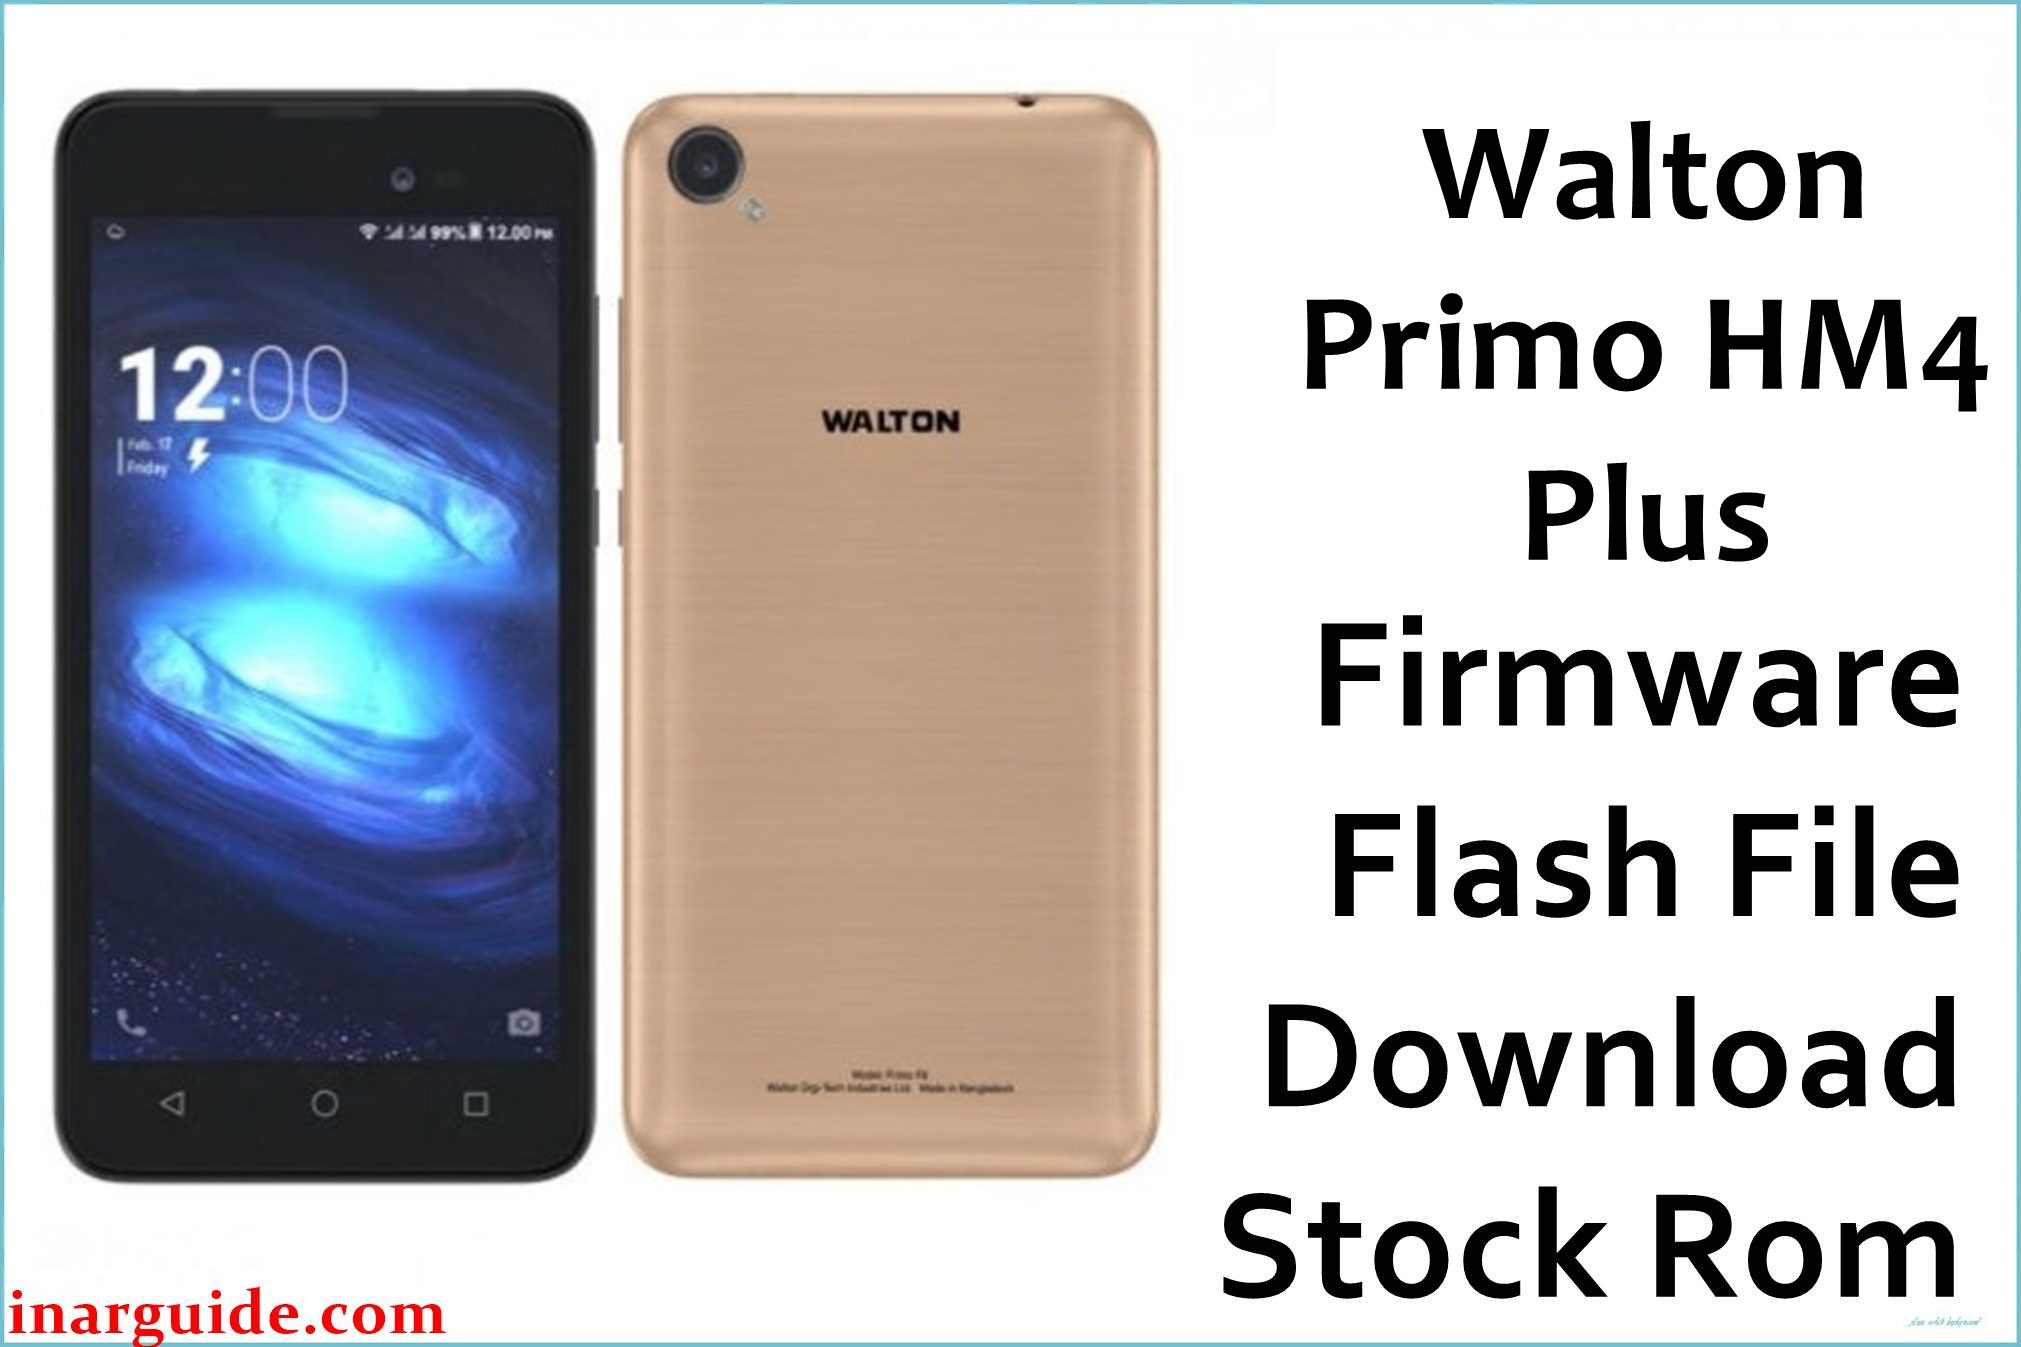 Walton Primo HM4 Plus